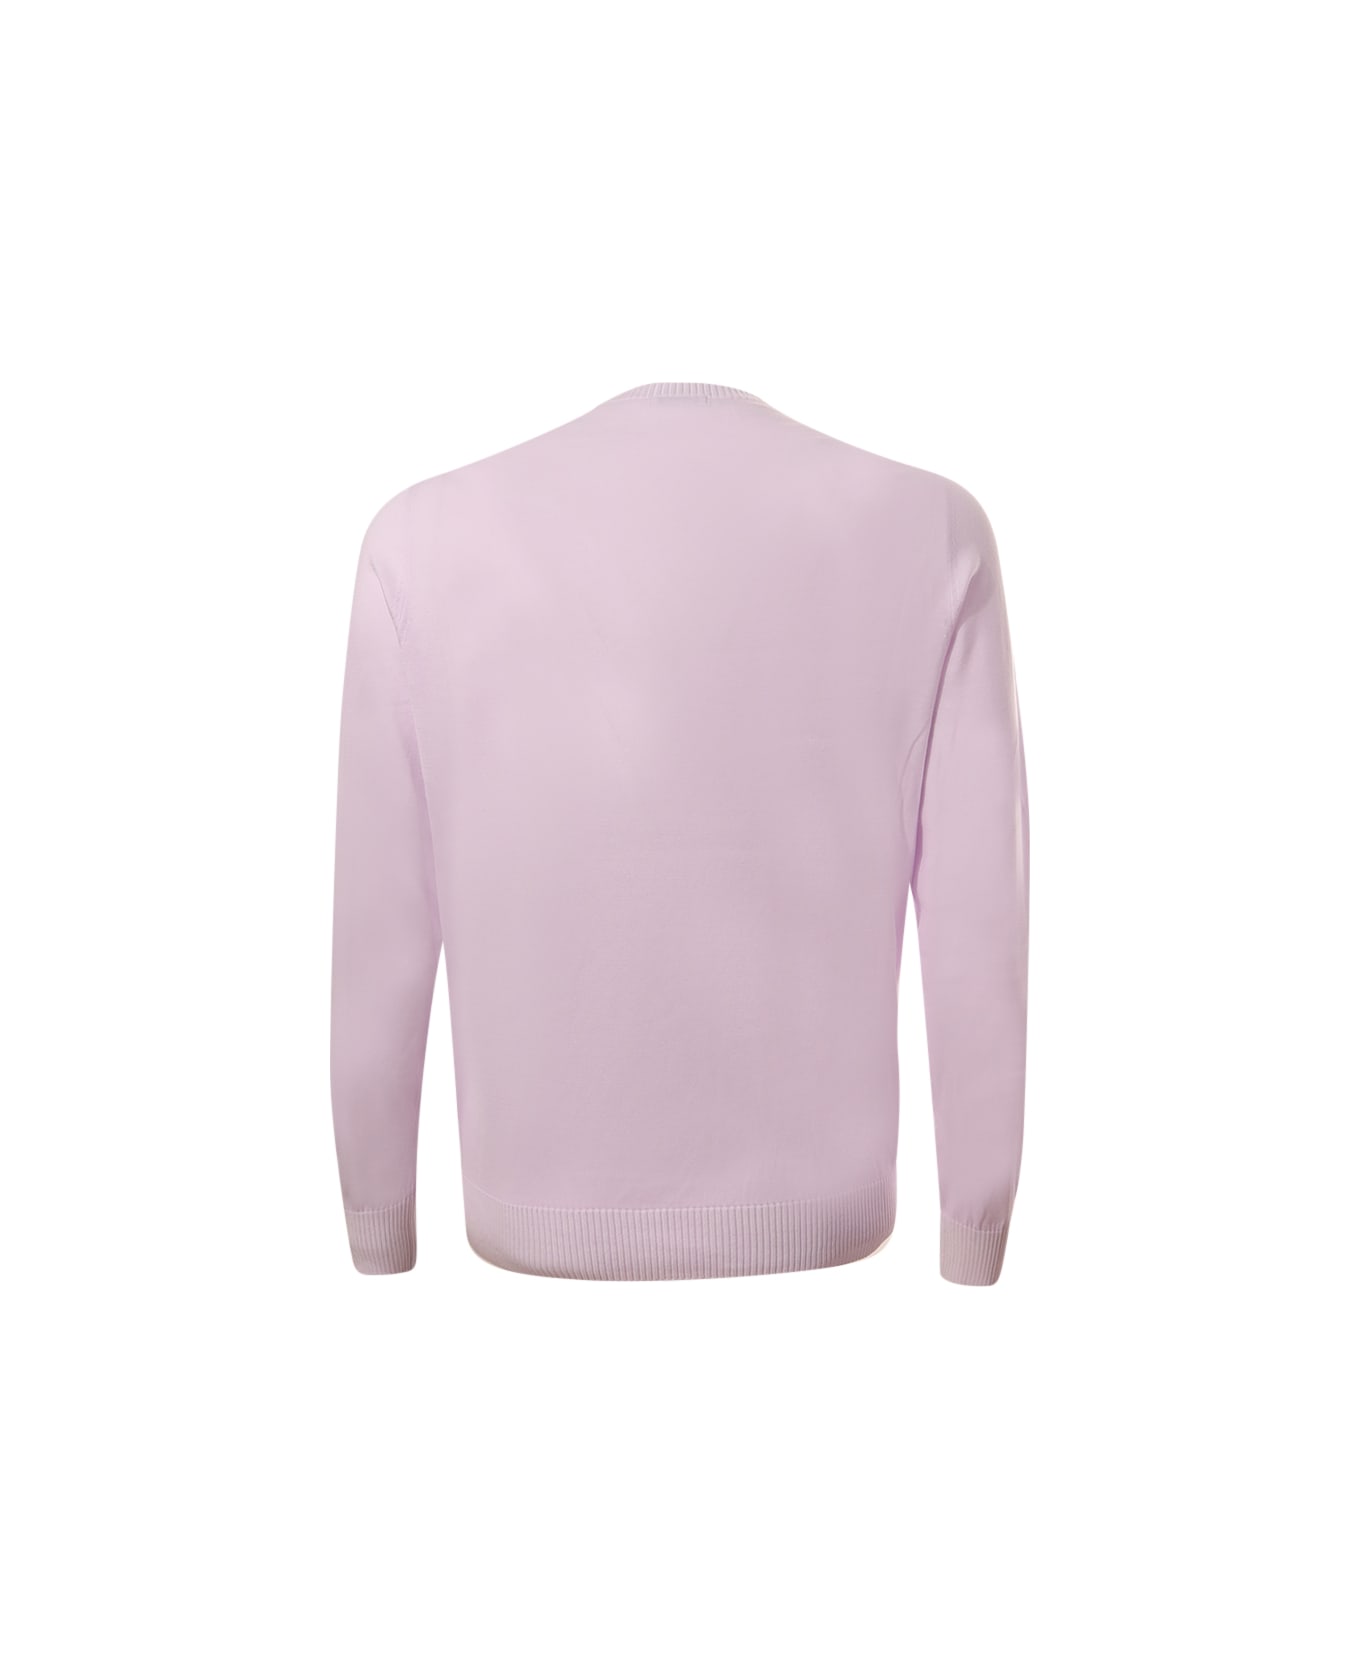 Malo Sweater - Purple